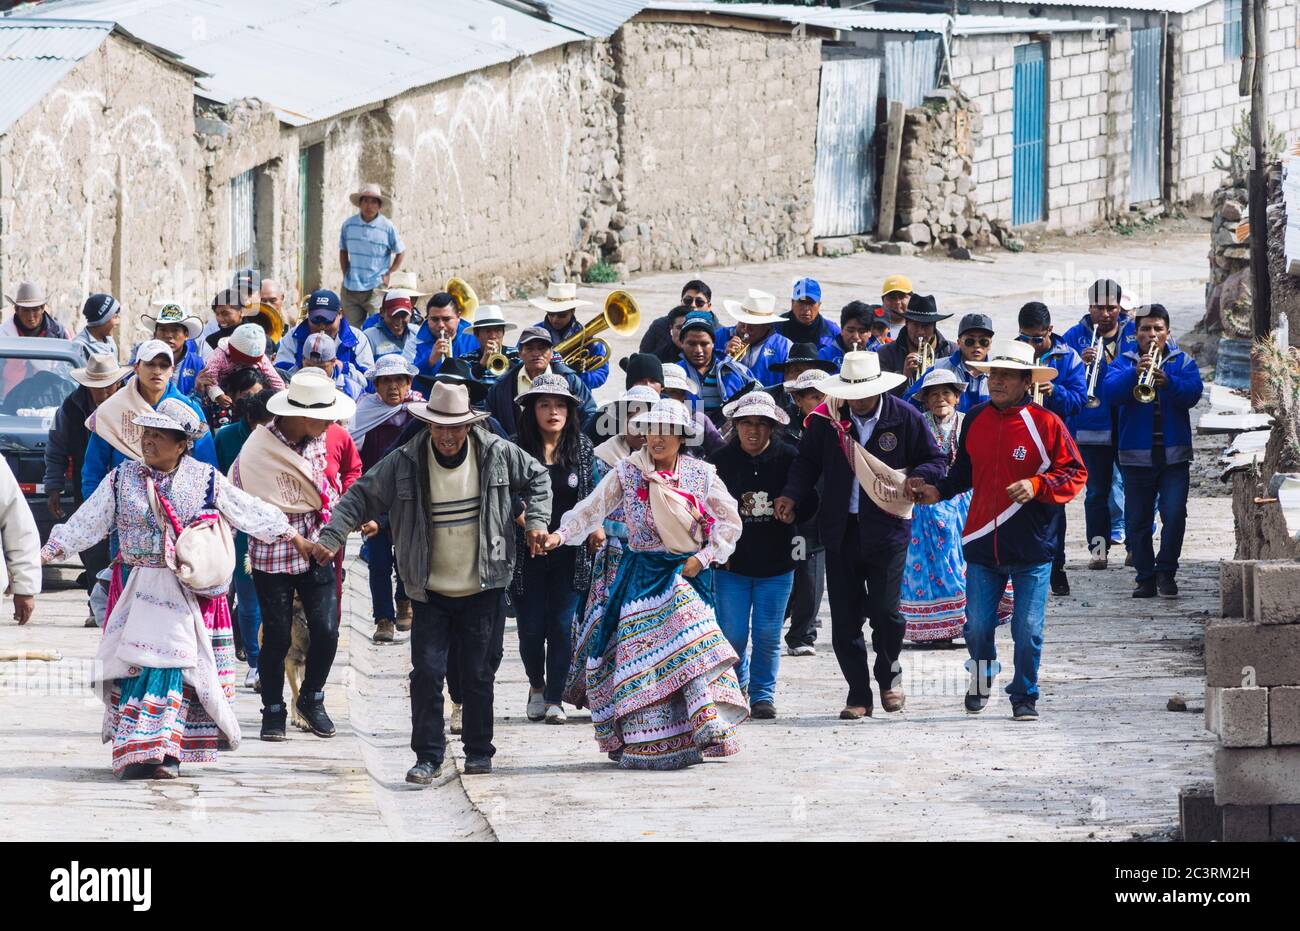 PINCHOLLO, COLCA VALLEY, PERU - JANUARY 20, 2018: Group of peruvian people parade through the small village of Pinchollo, Colca Valley, Peru Stock Photo